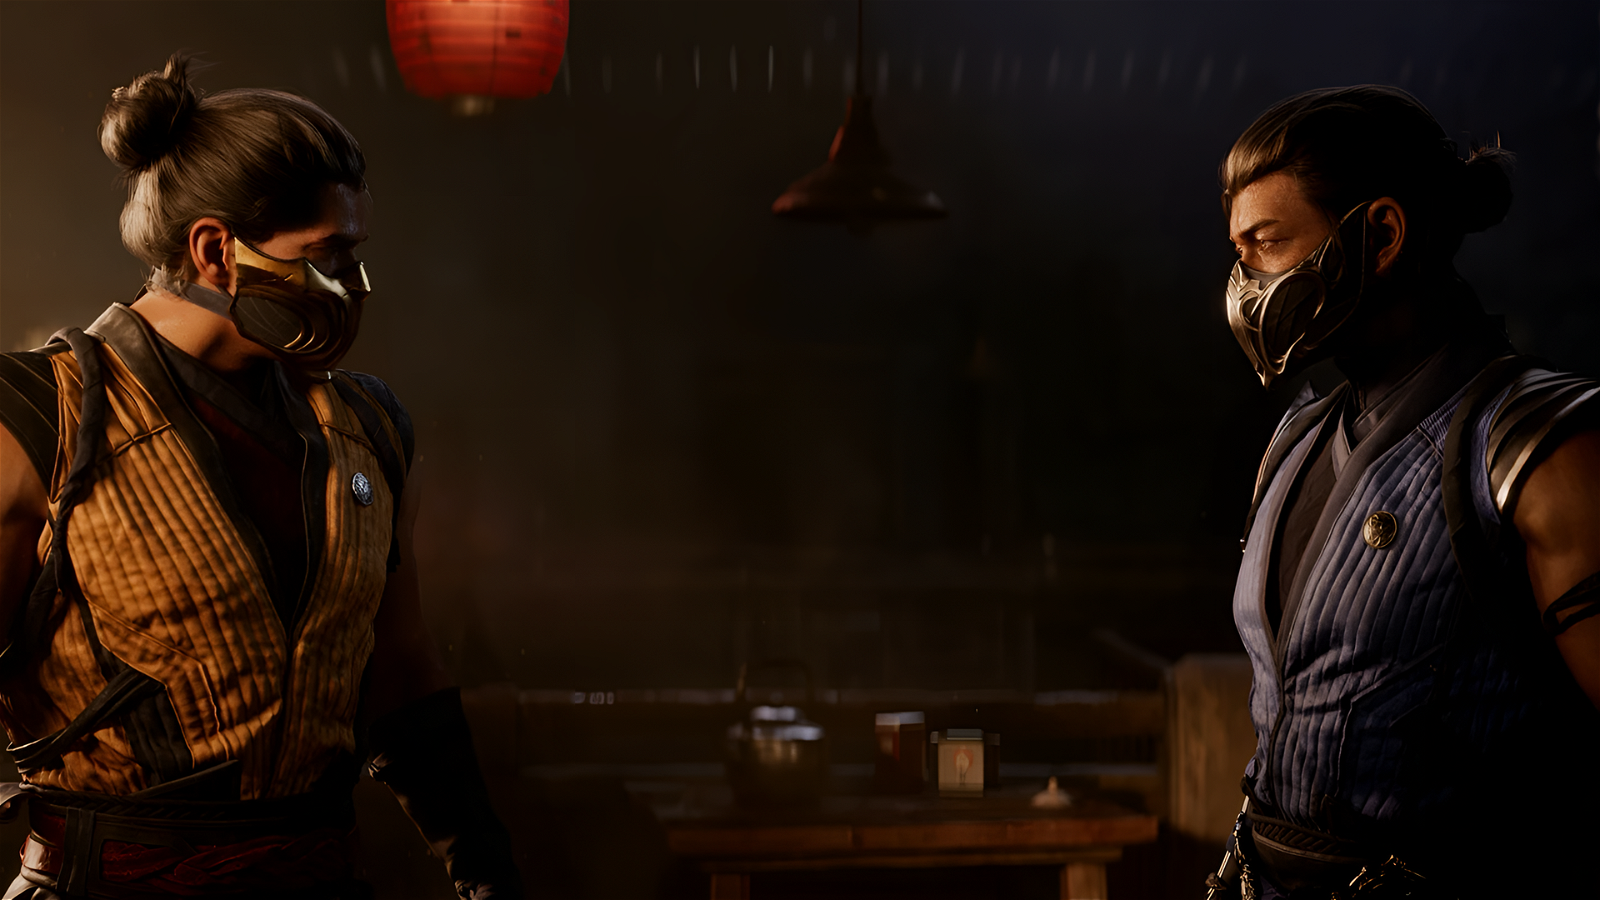 New Mortal Kombat 1 Trailer Showcases Some Customization Options